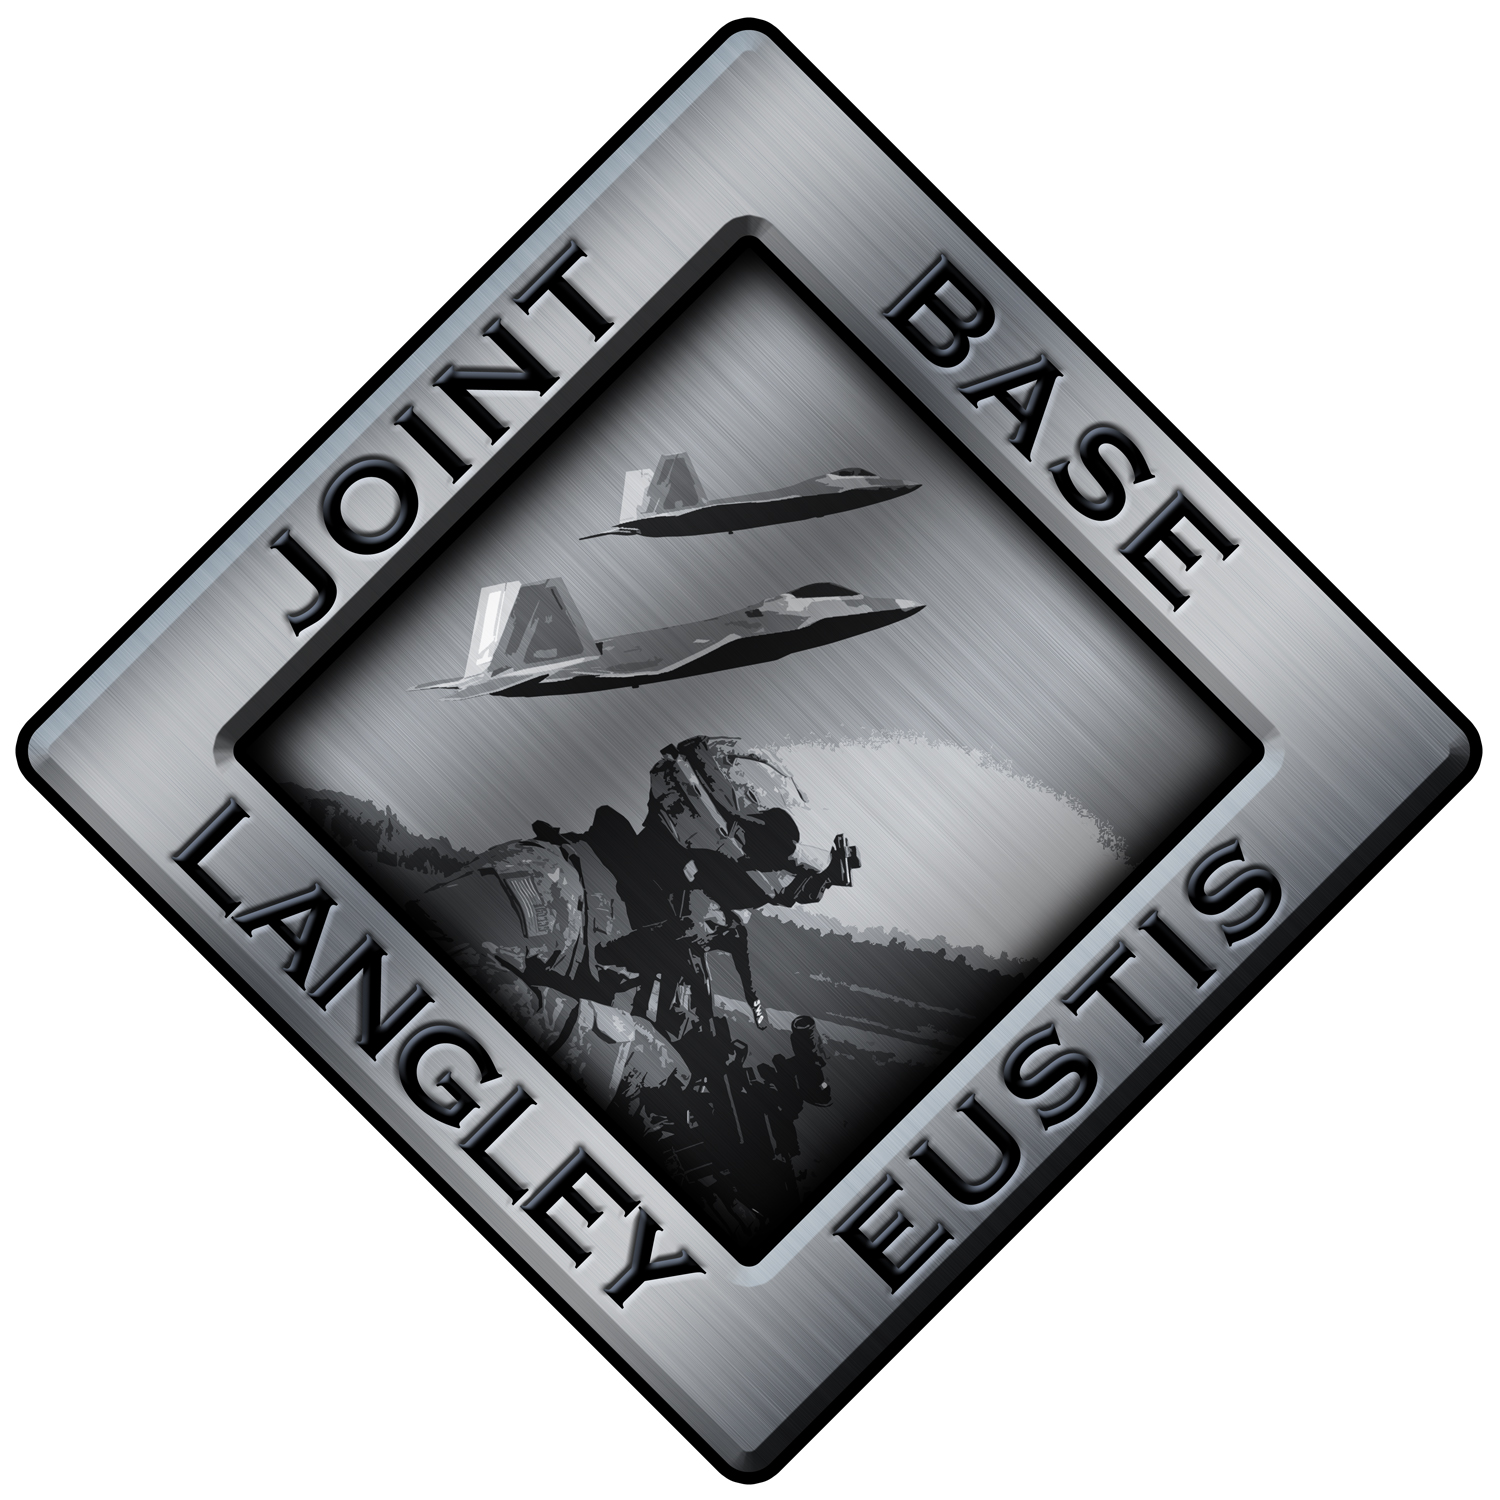 Image of JBLE logo